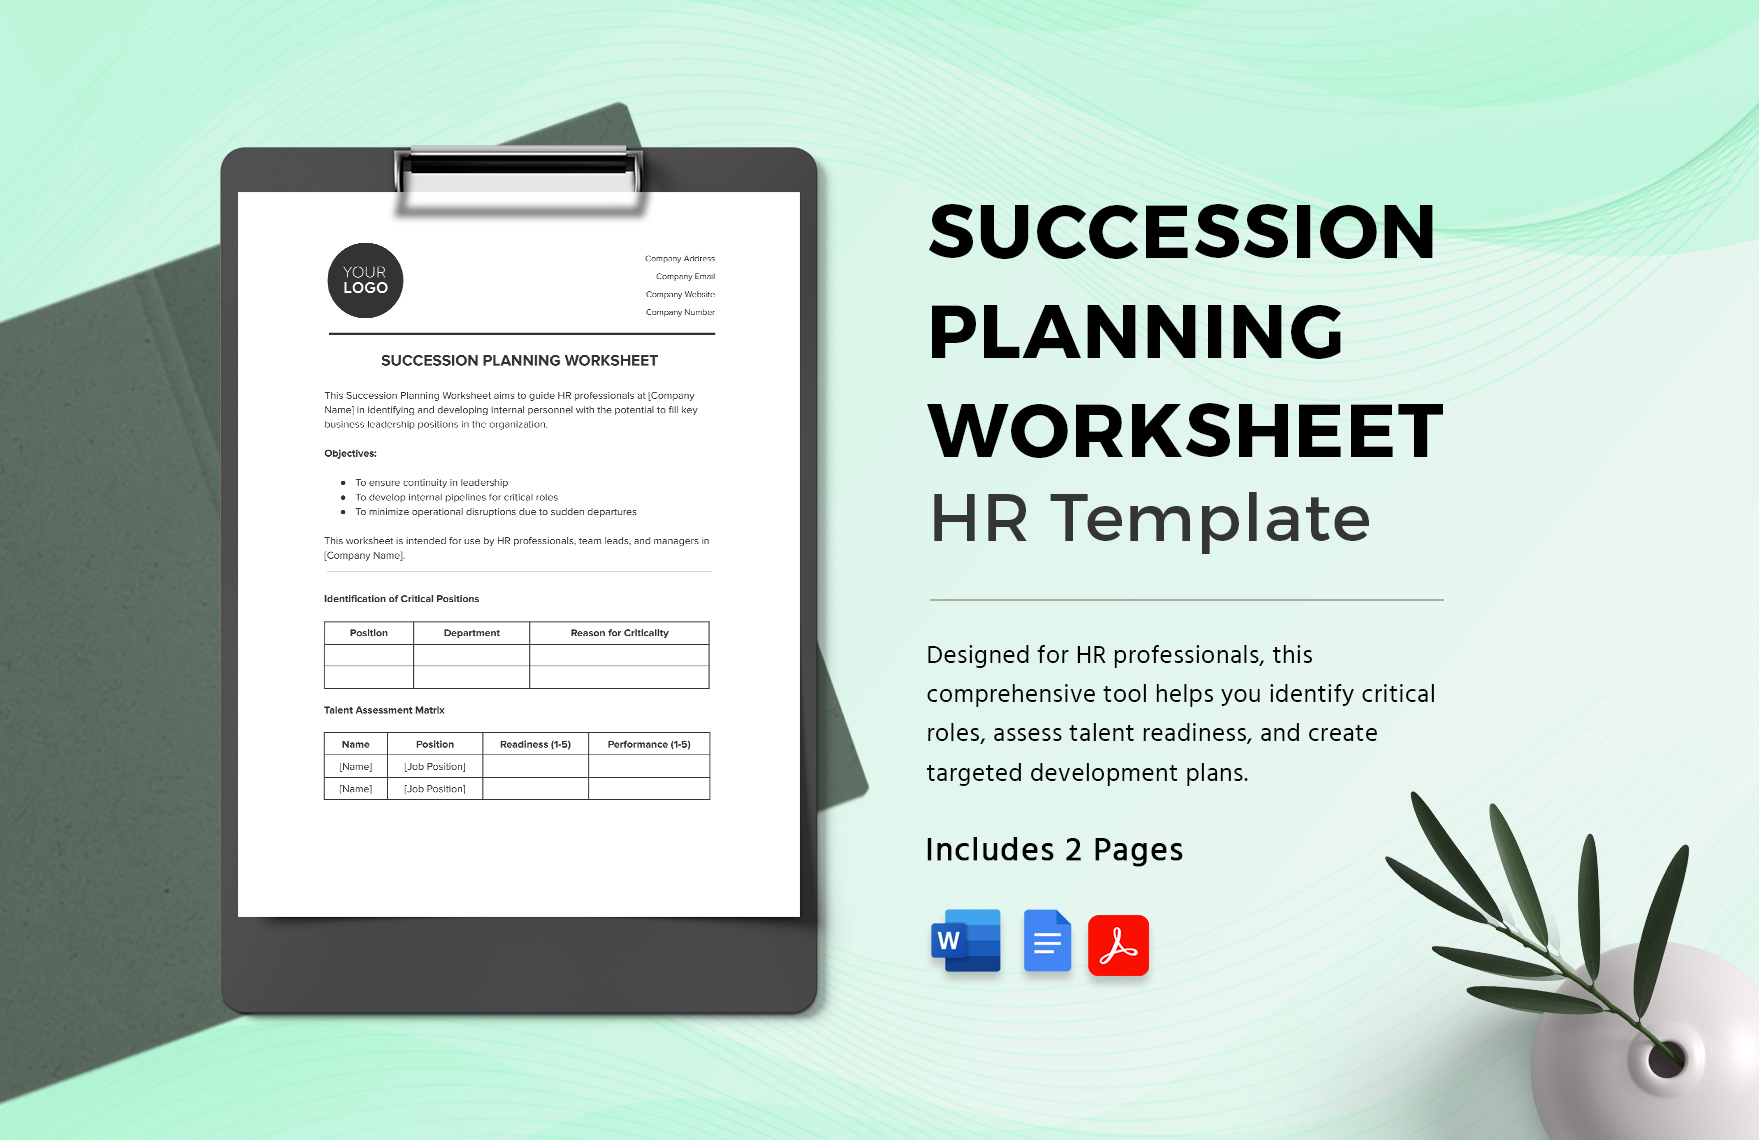 Succession Planning Worksheet HR Template in Word, Google Docs, PDF